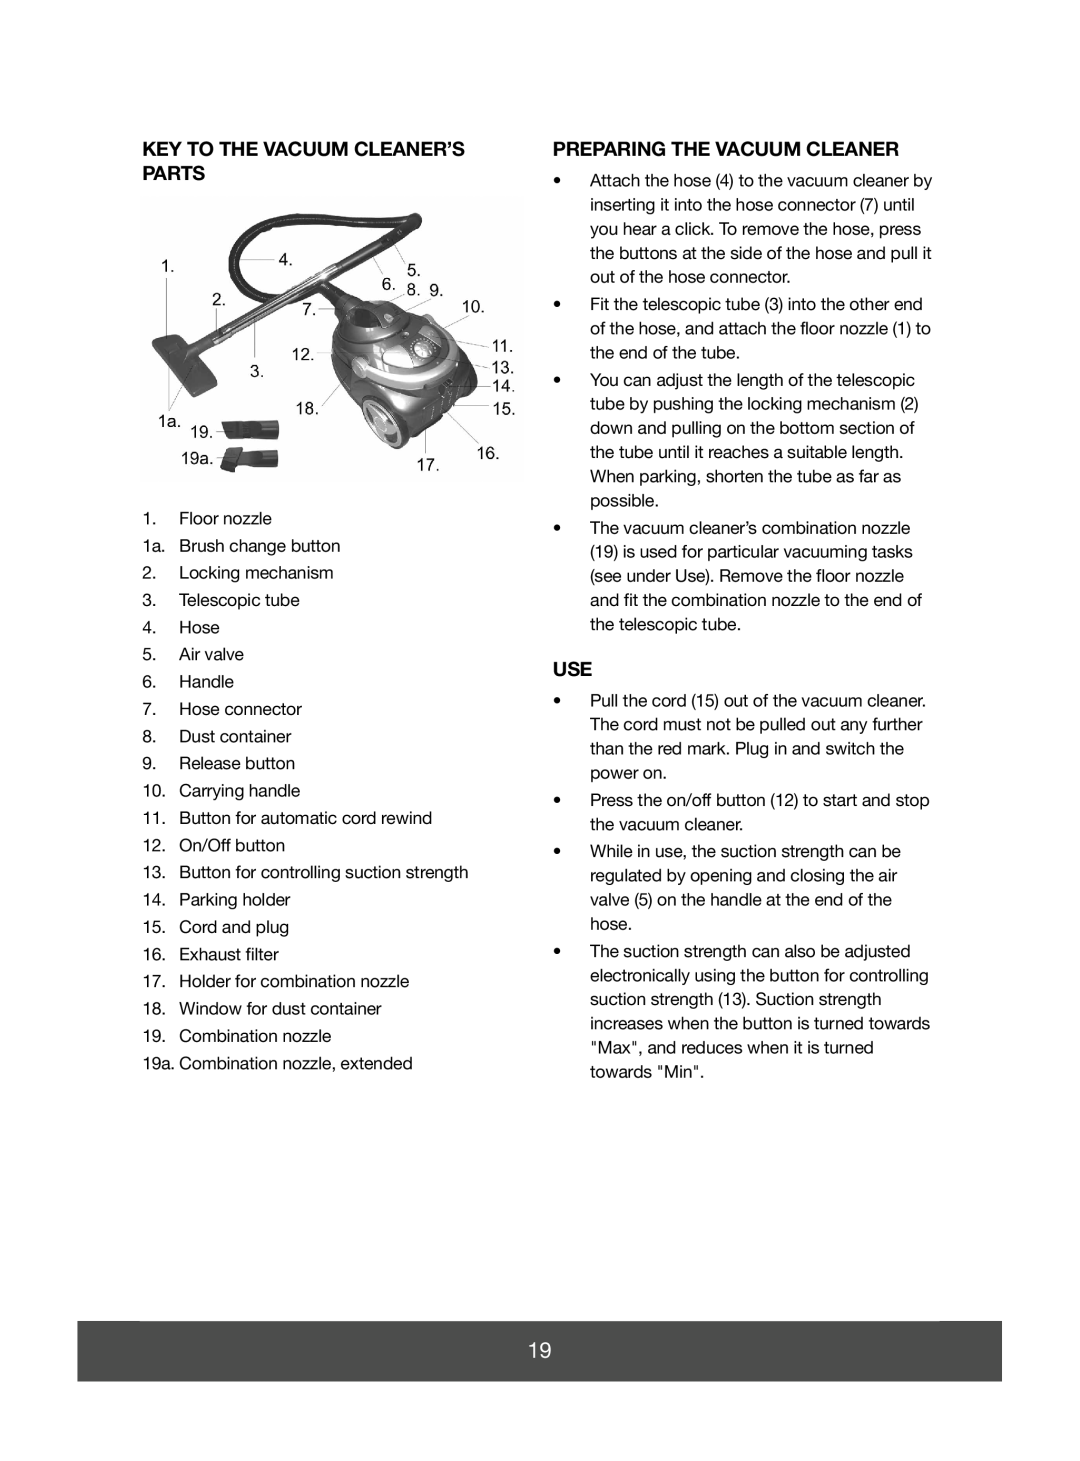 Melissa 640-048 manual Key To The Vacuum Cleaner’S Parts, Preparing The Vacuum Cleaner 